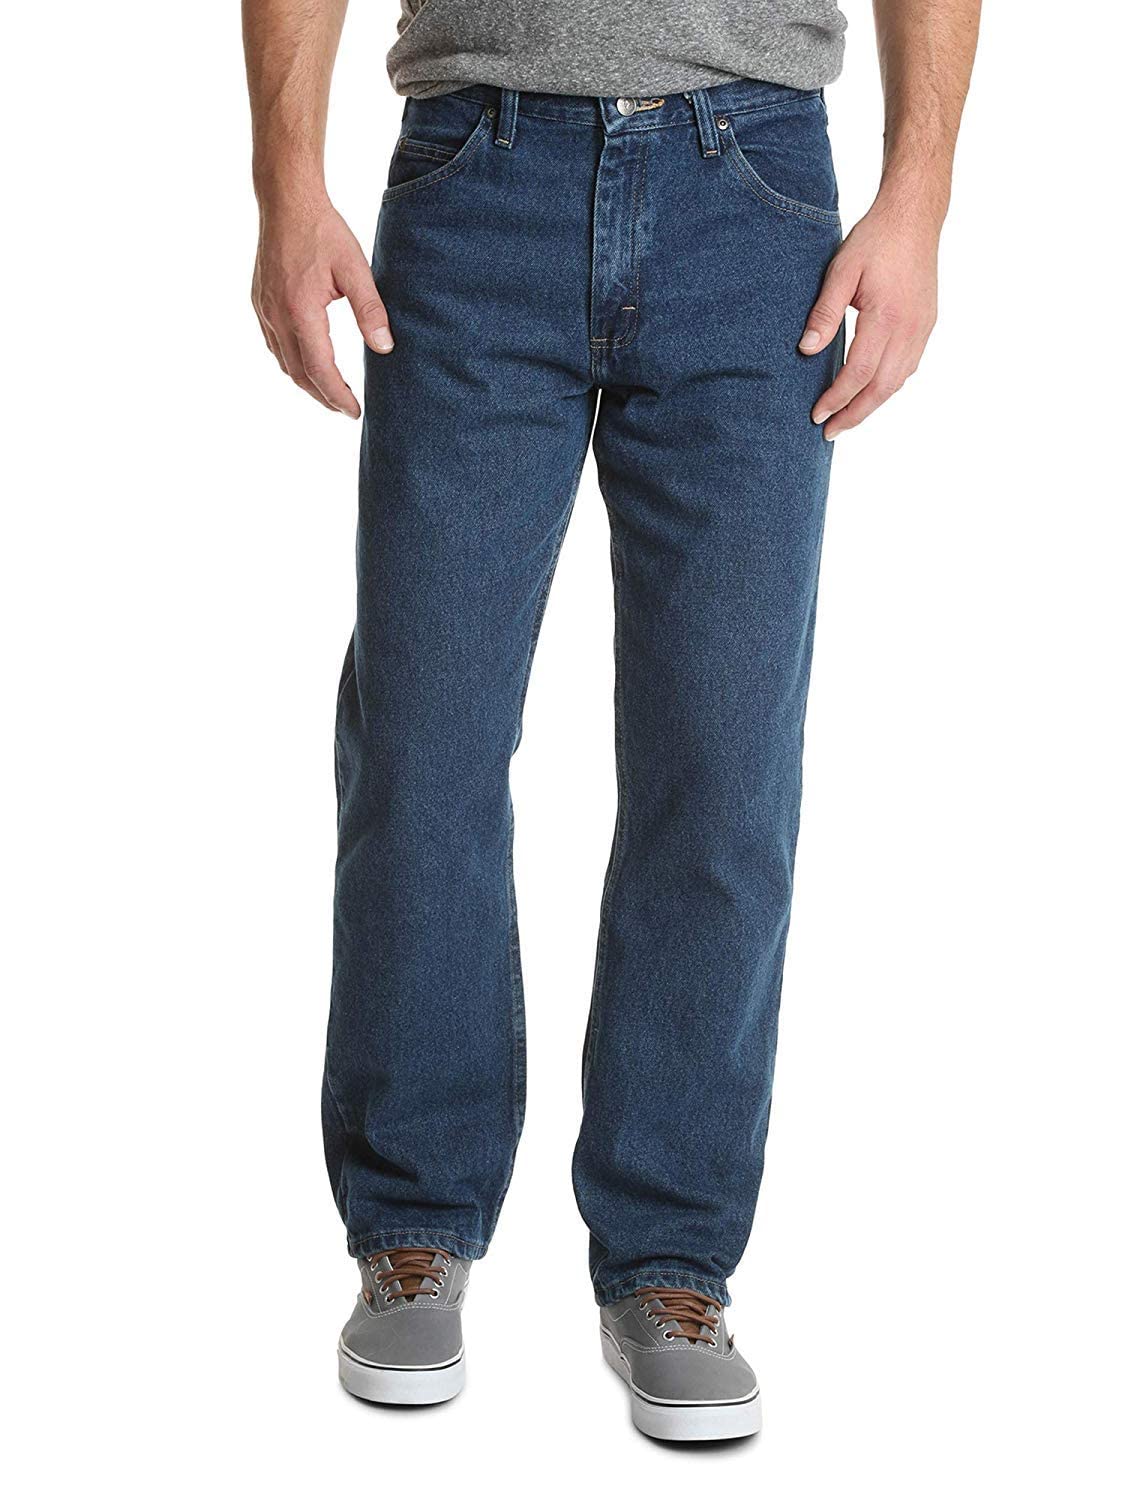 Wrangler Authentics Men's Big & Tall Classic 5-Pocket Relaxed Fit Cotton Jean, Dark Stonewash, 48W x 30L